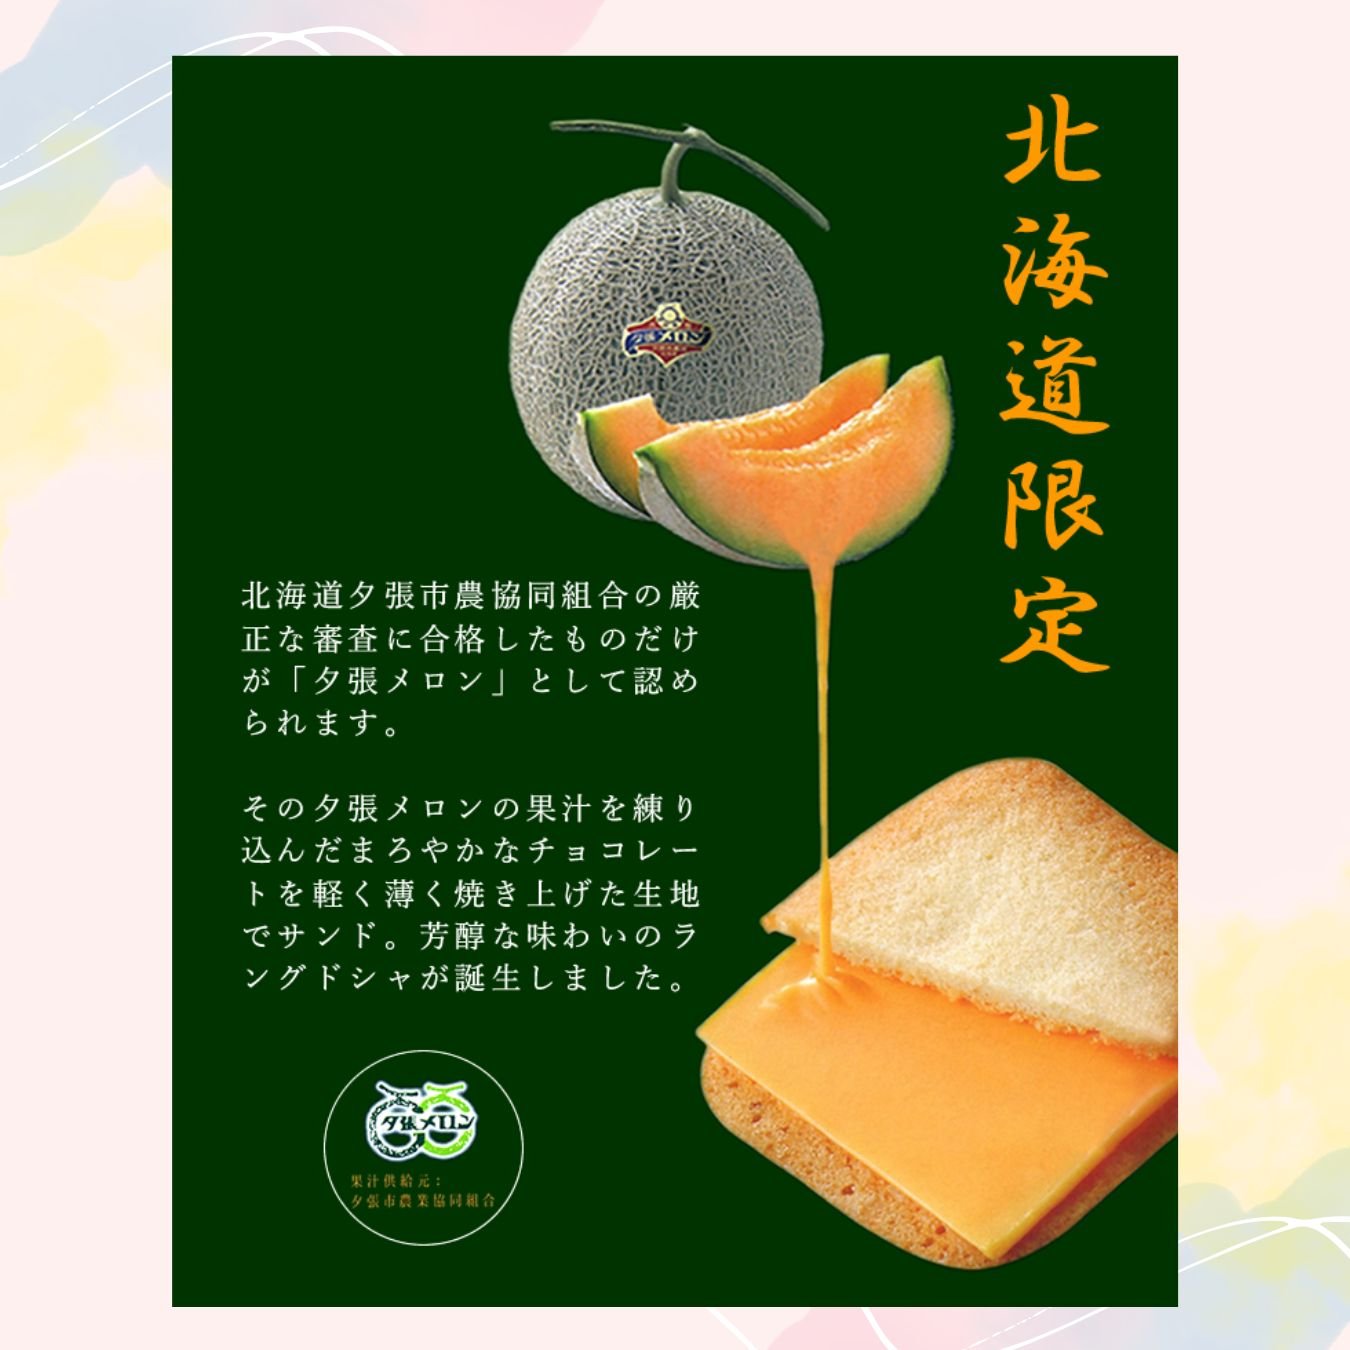 Yubari Melon Lang de Chat Cookie - JapanHapiness